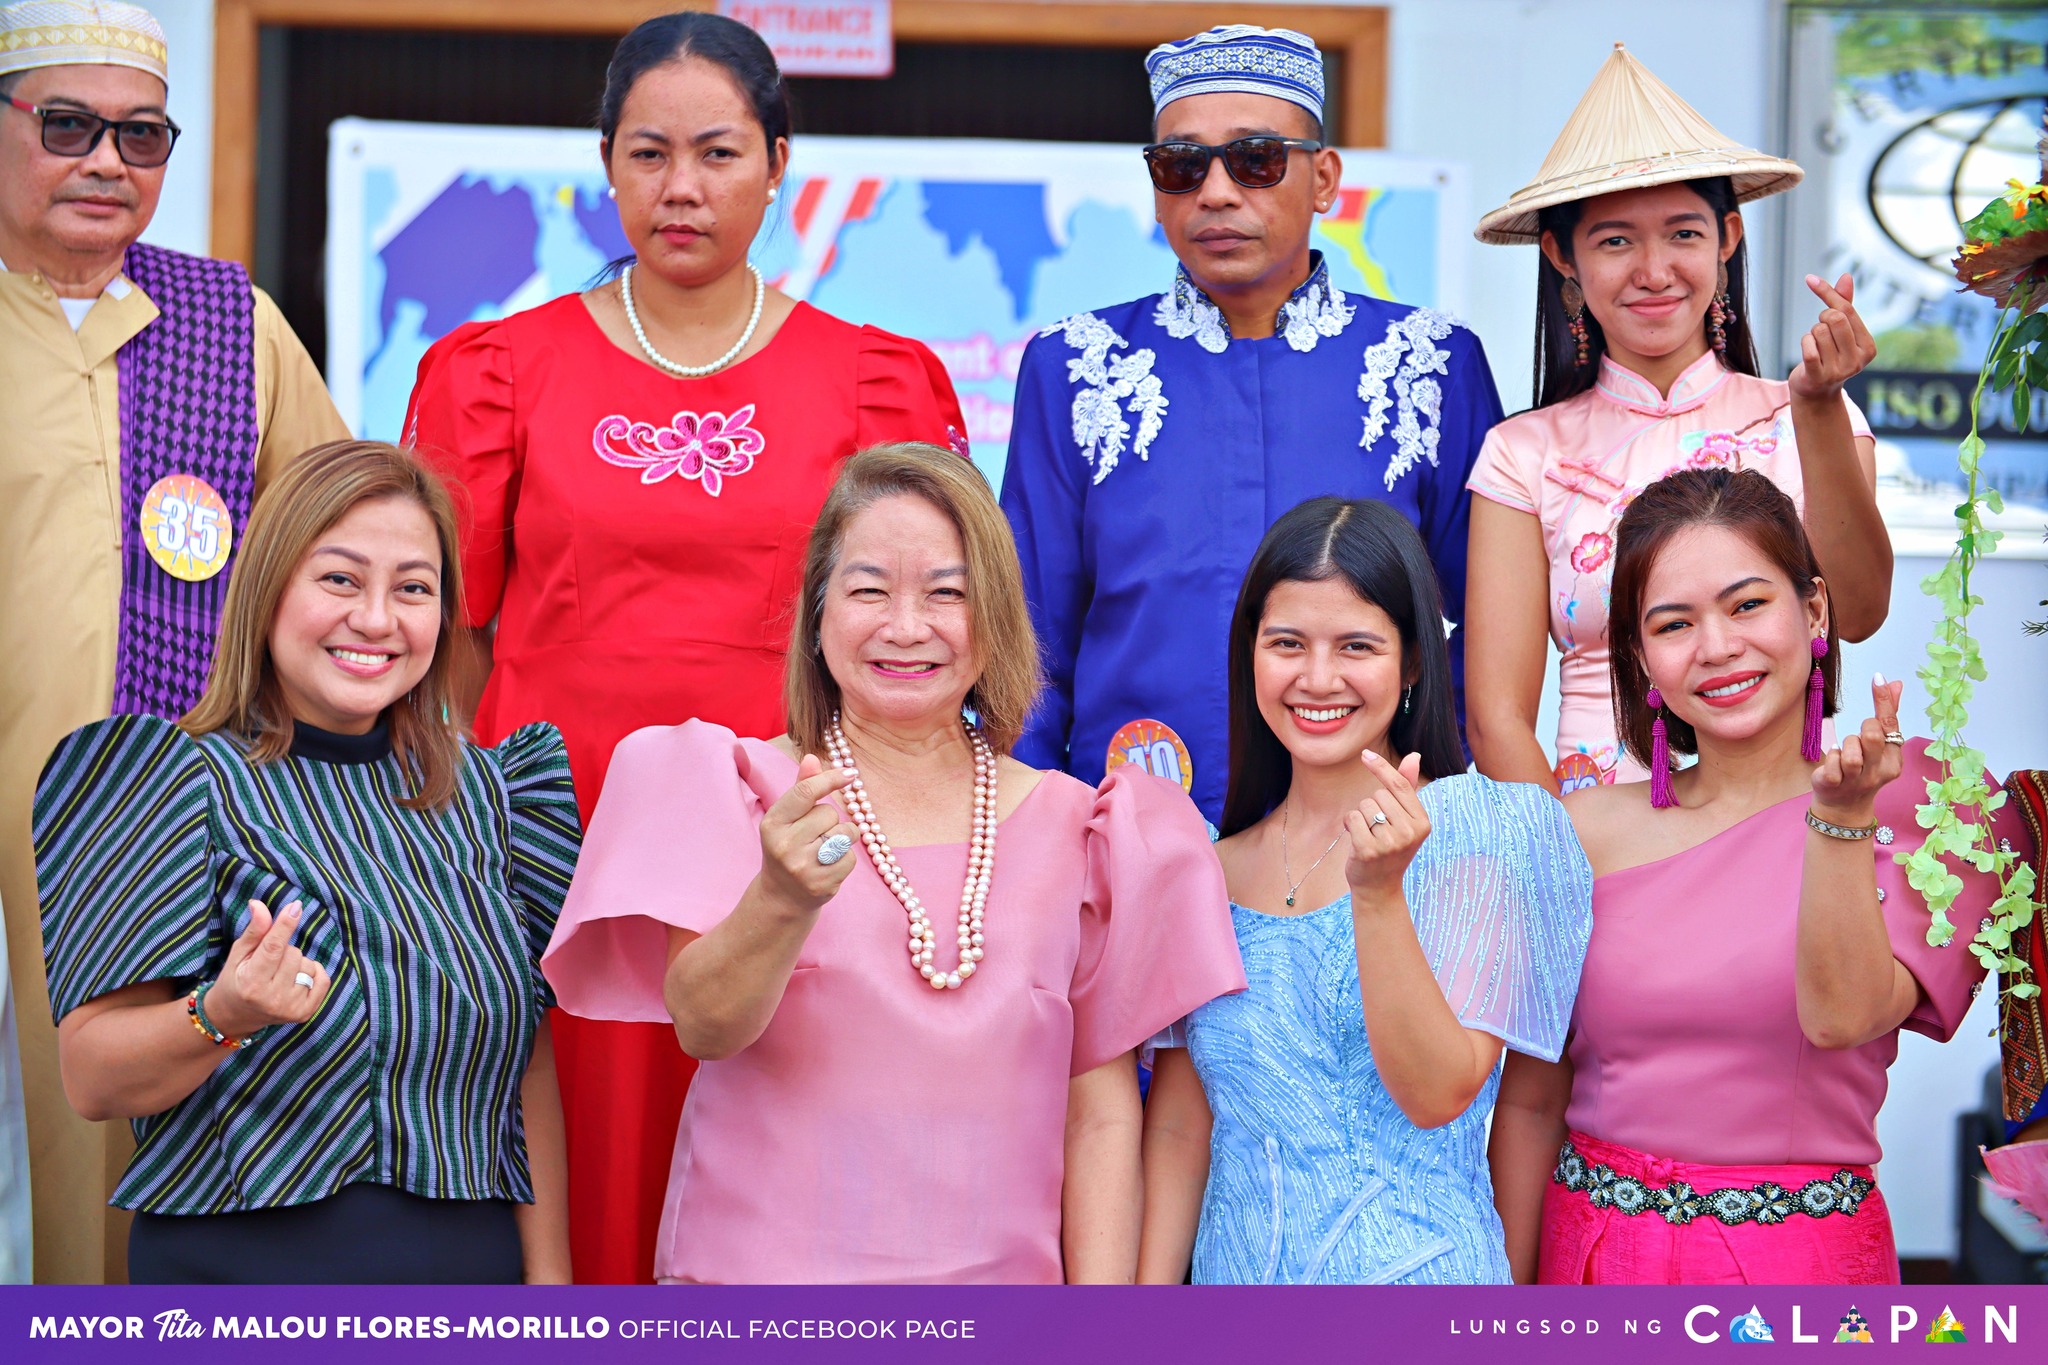 ASEAN National costume winners